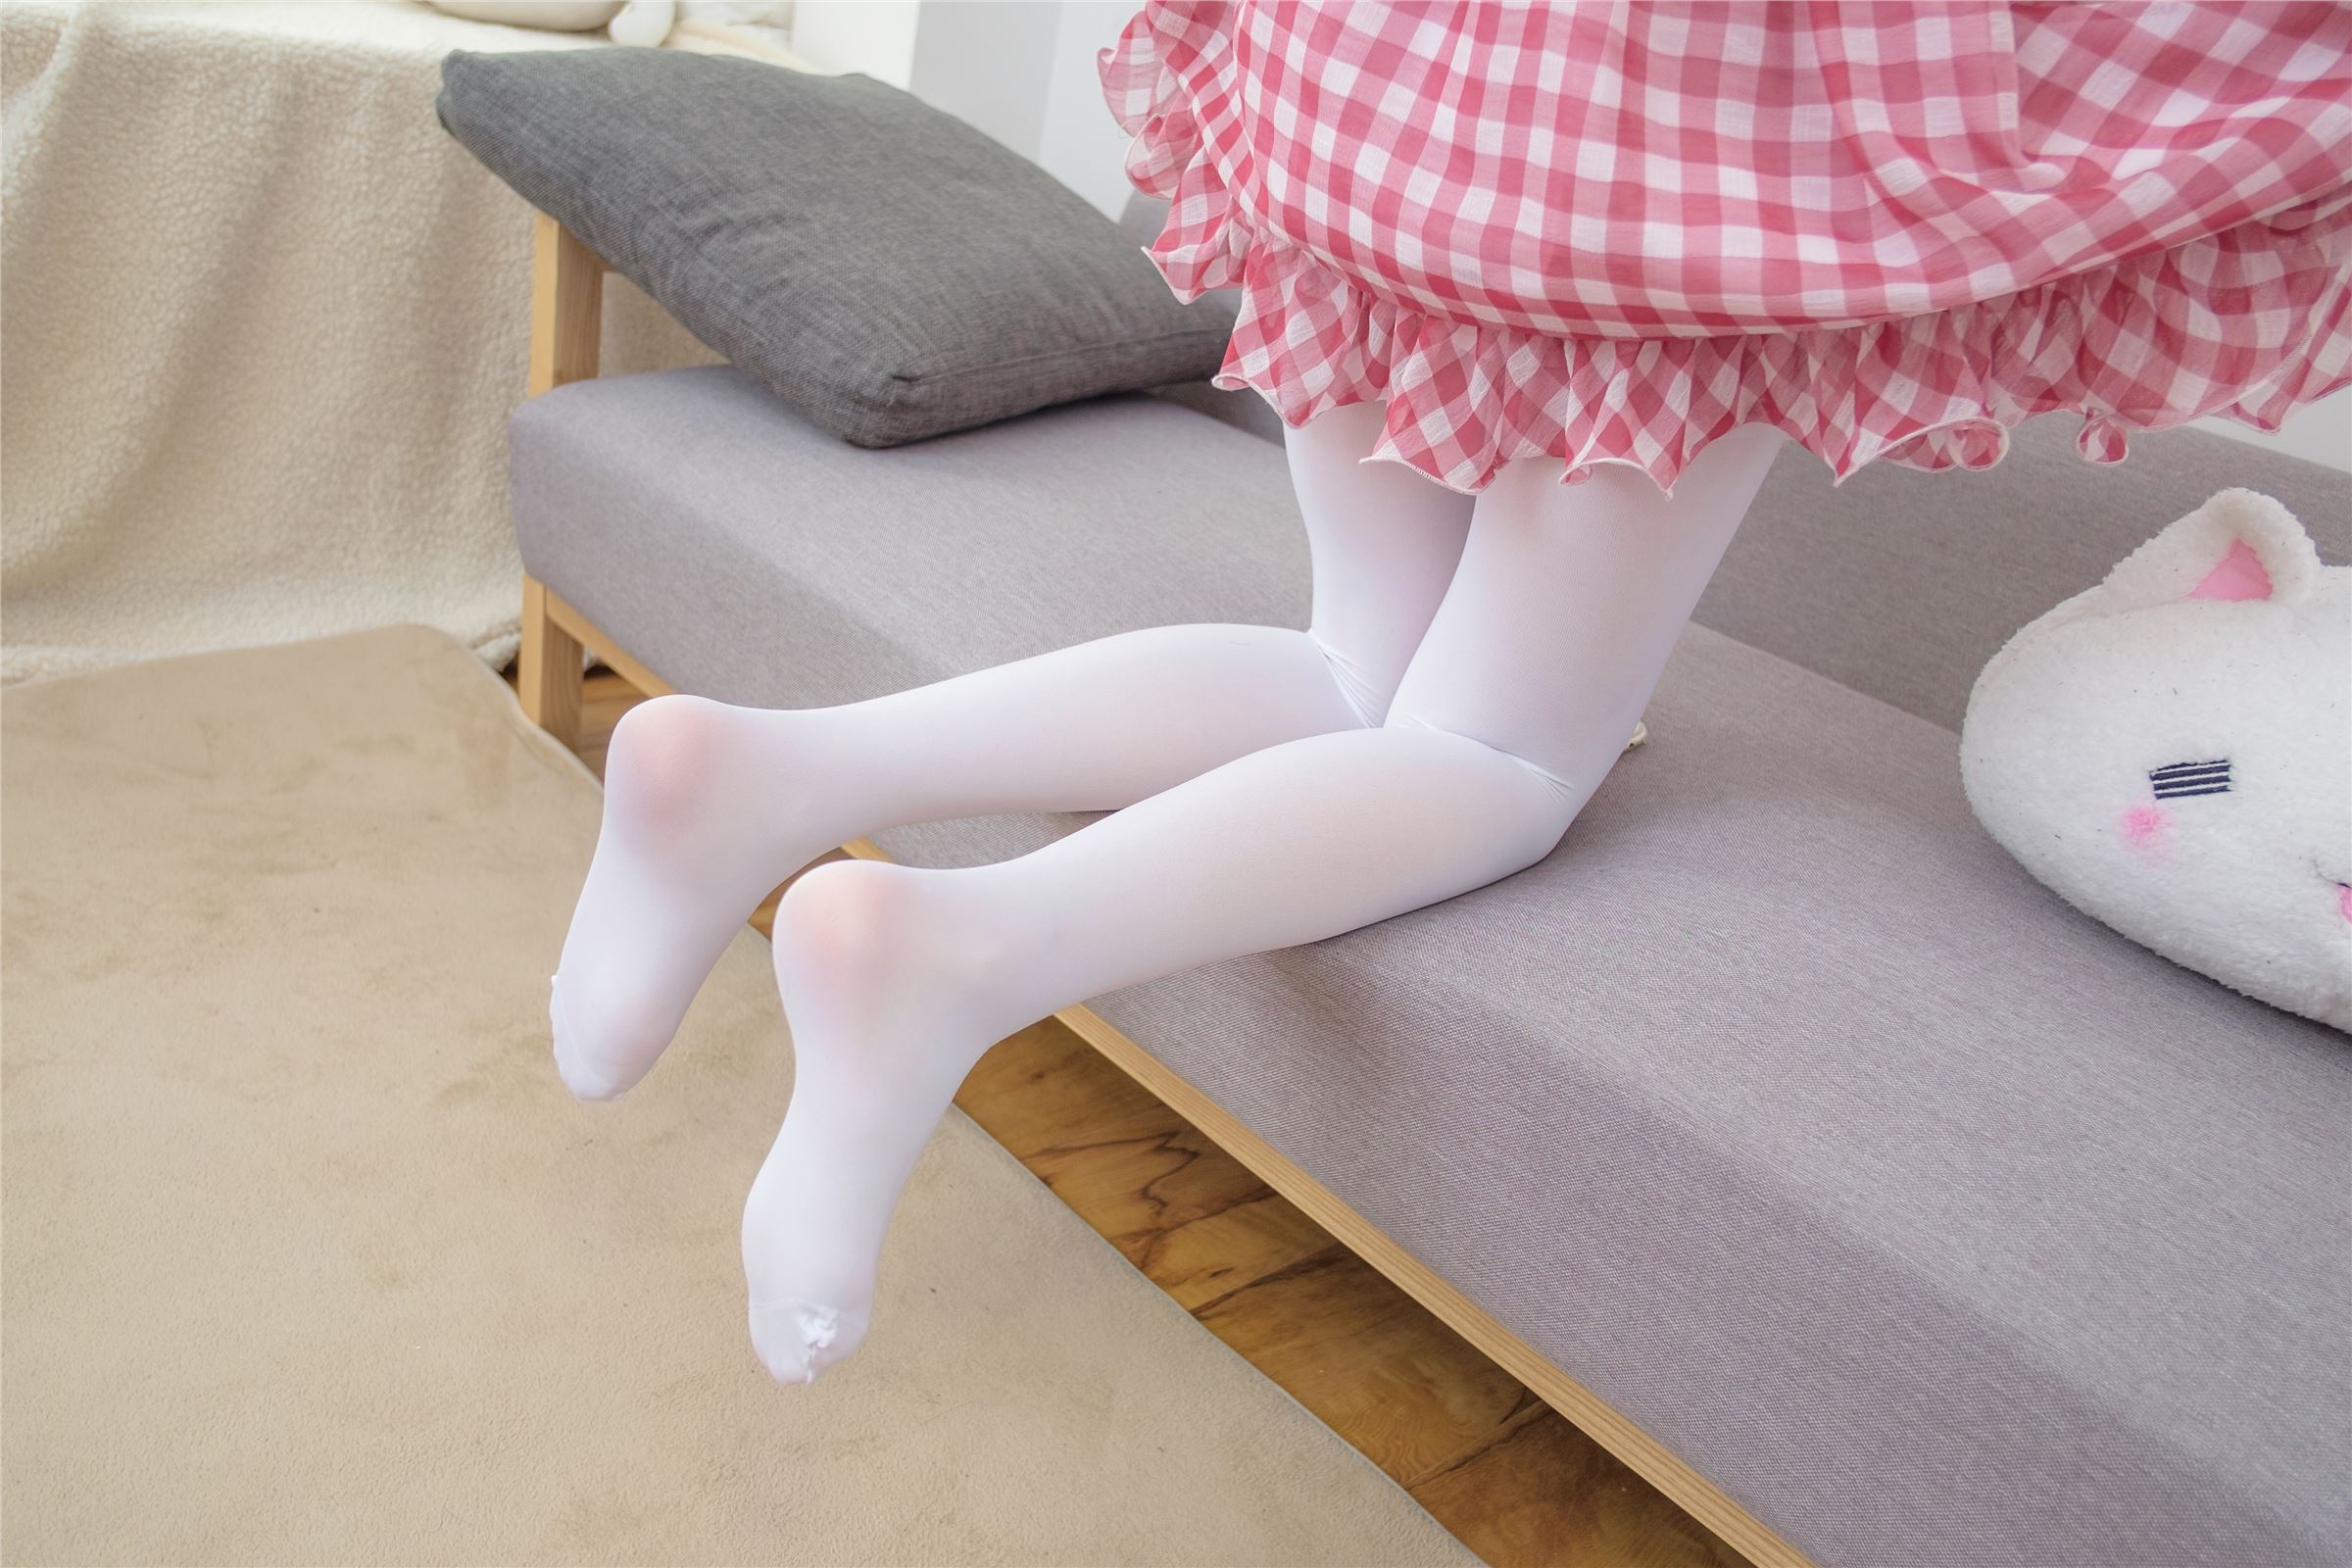 [Sen Luo consortium] rolice foot photo r15-011 red plaid skirt white silk mm